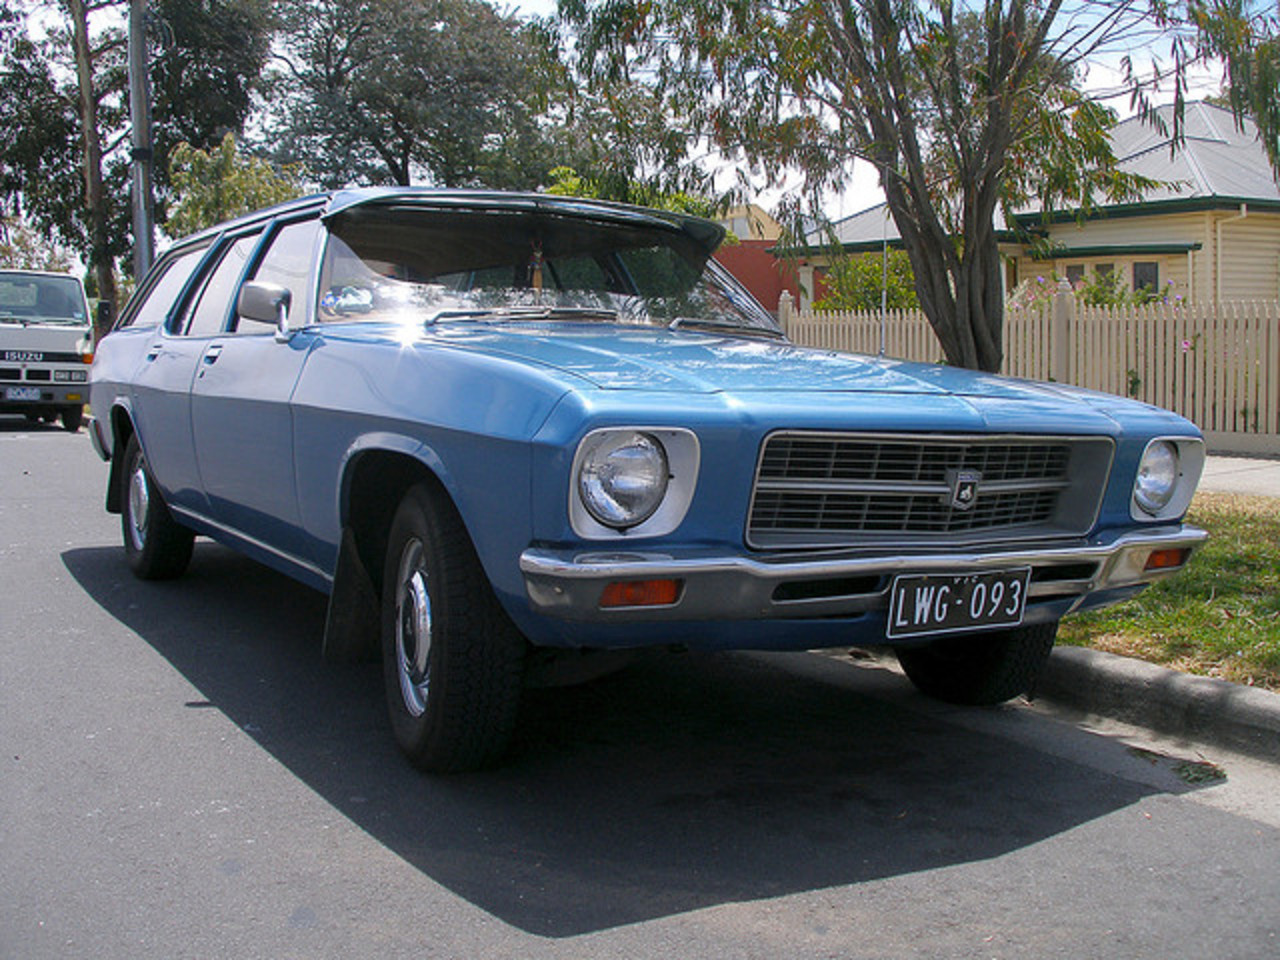 HQ Holden Kingswood wagon | Flickr - Photo Sharing!